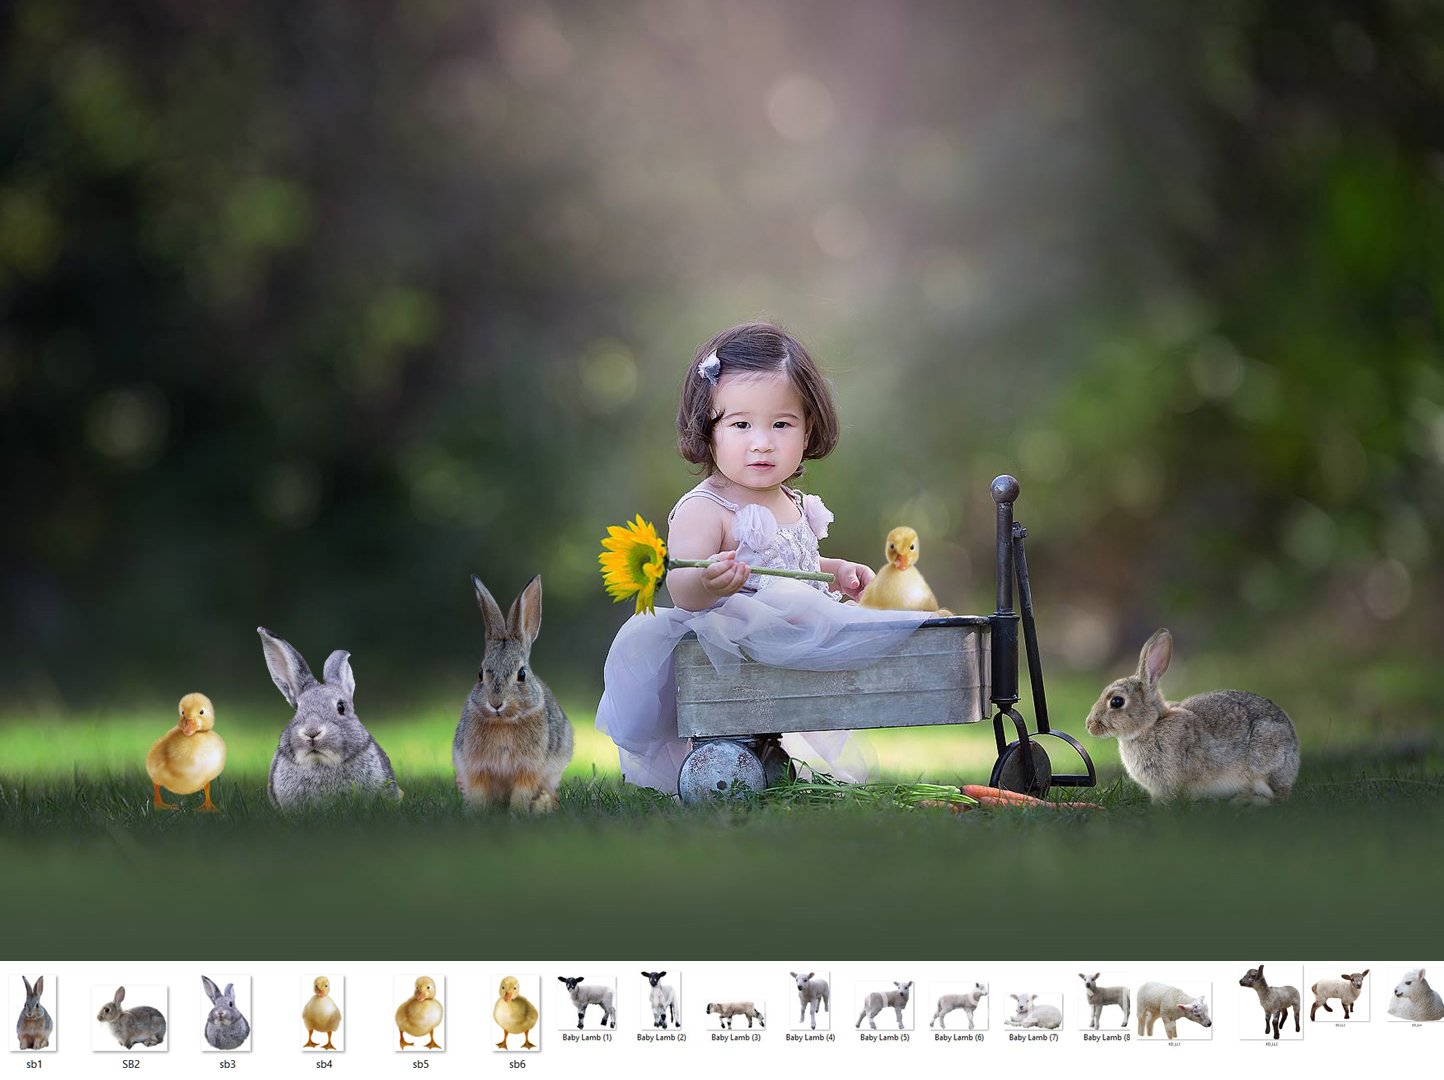 Spring Babies Animal Overlays - Photoshop Overlays, Digital Backgrounds and Lightroom Presets